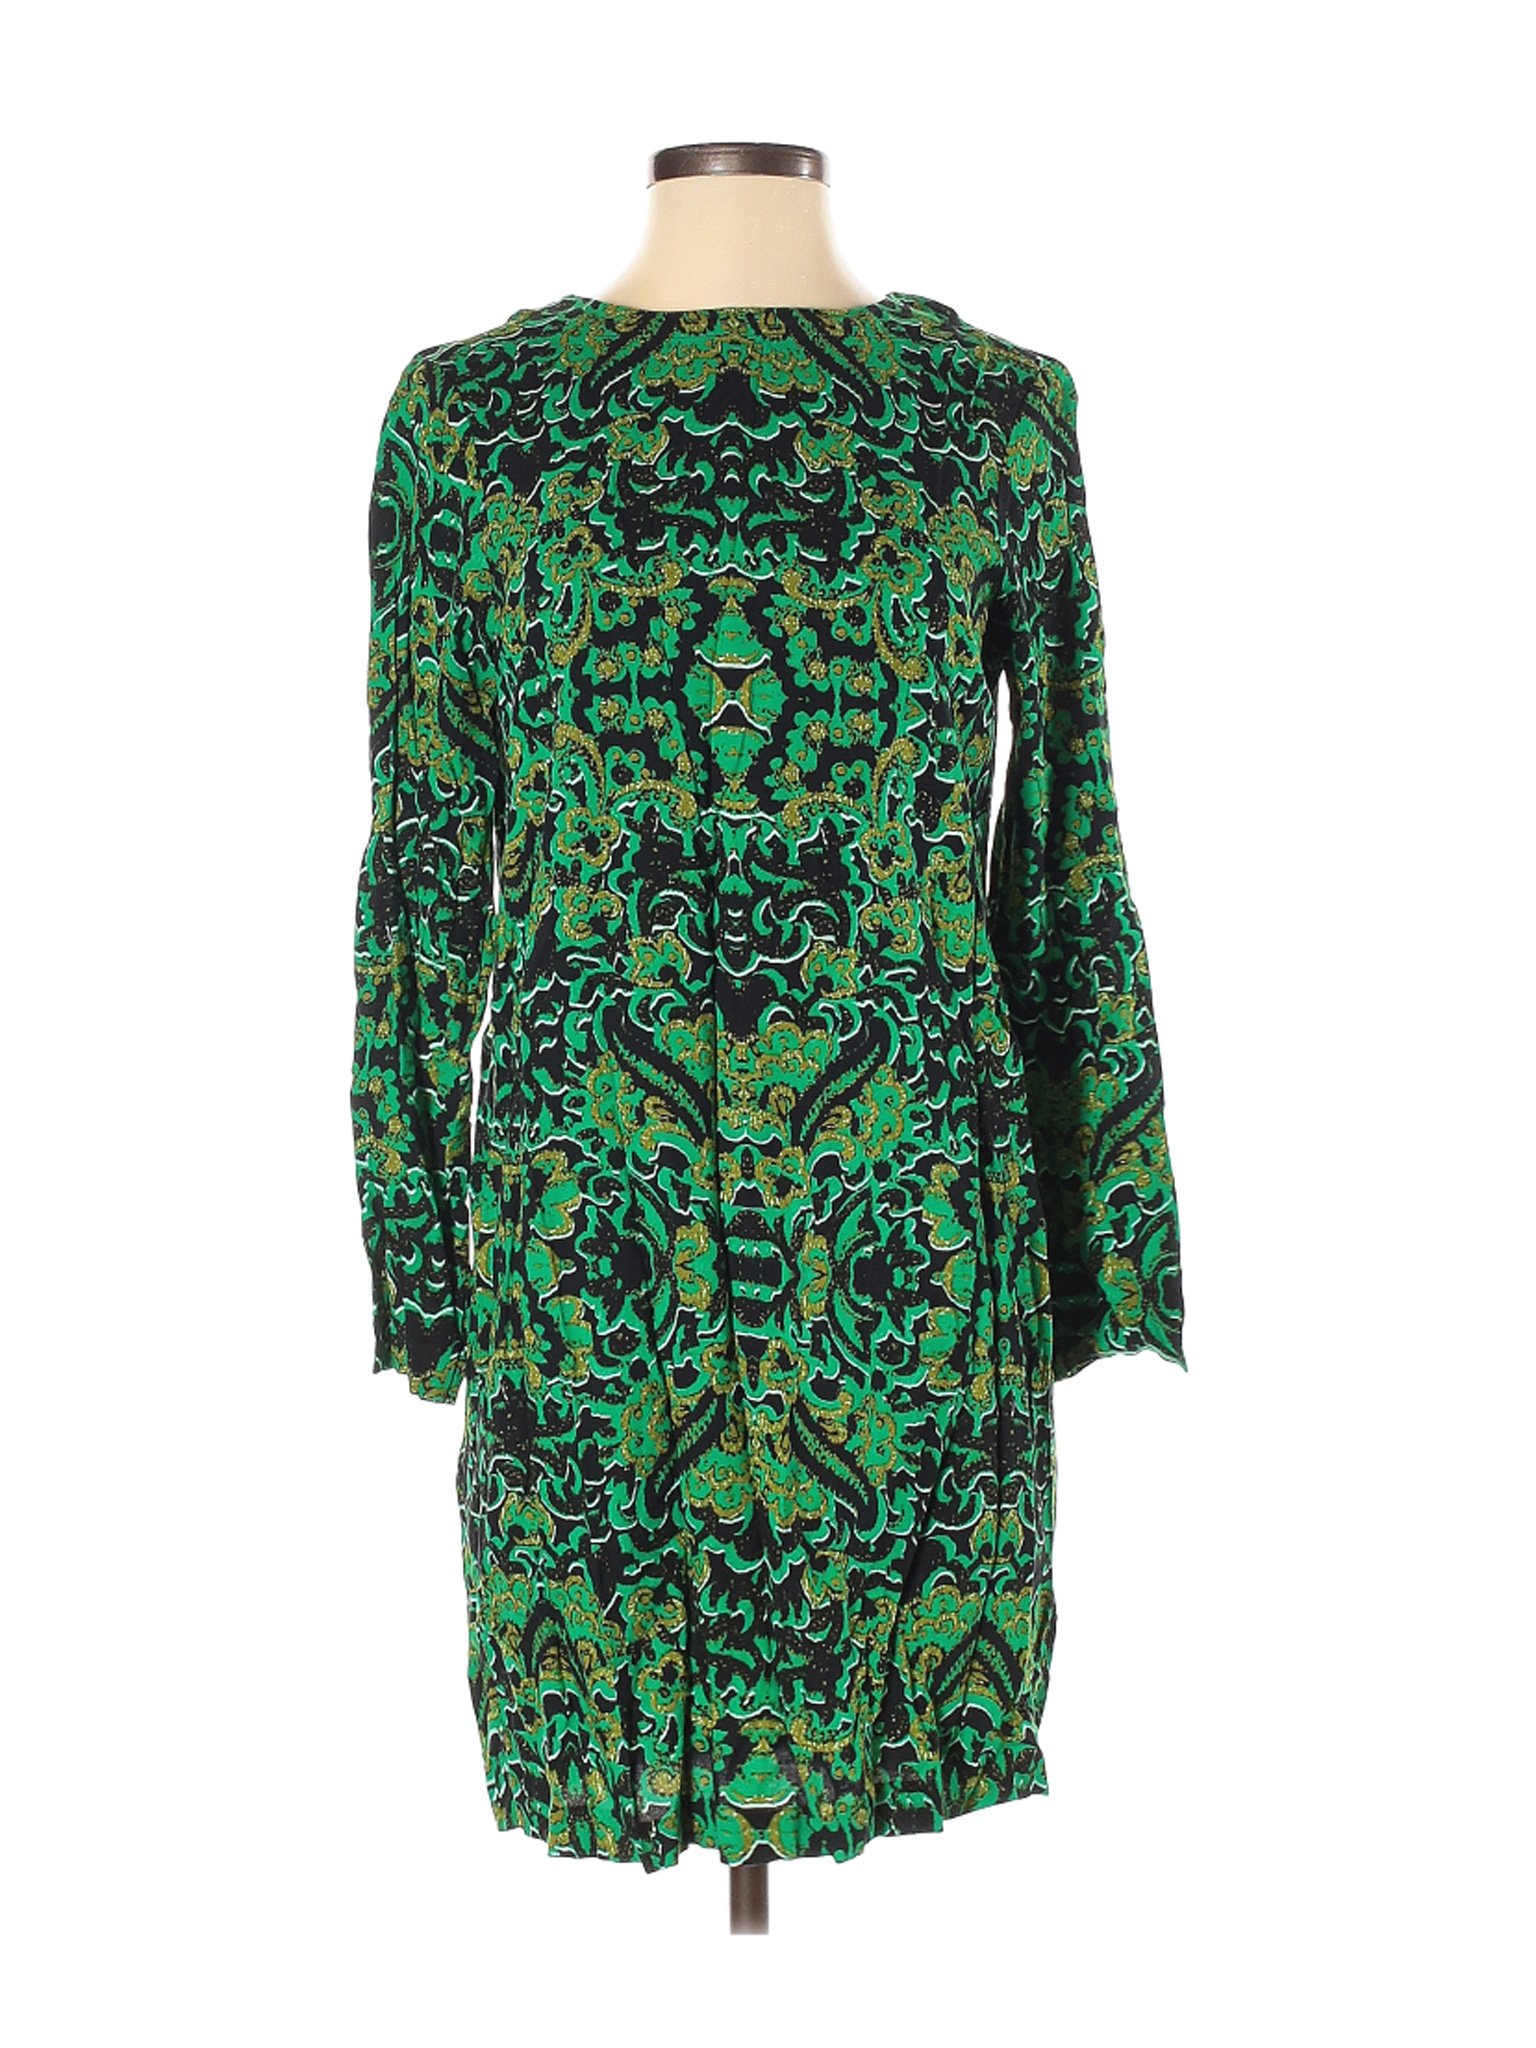 H&M Women Green Casual Dress 4 | eBay